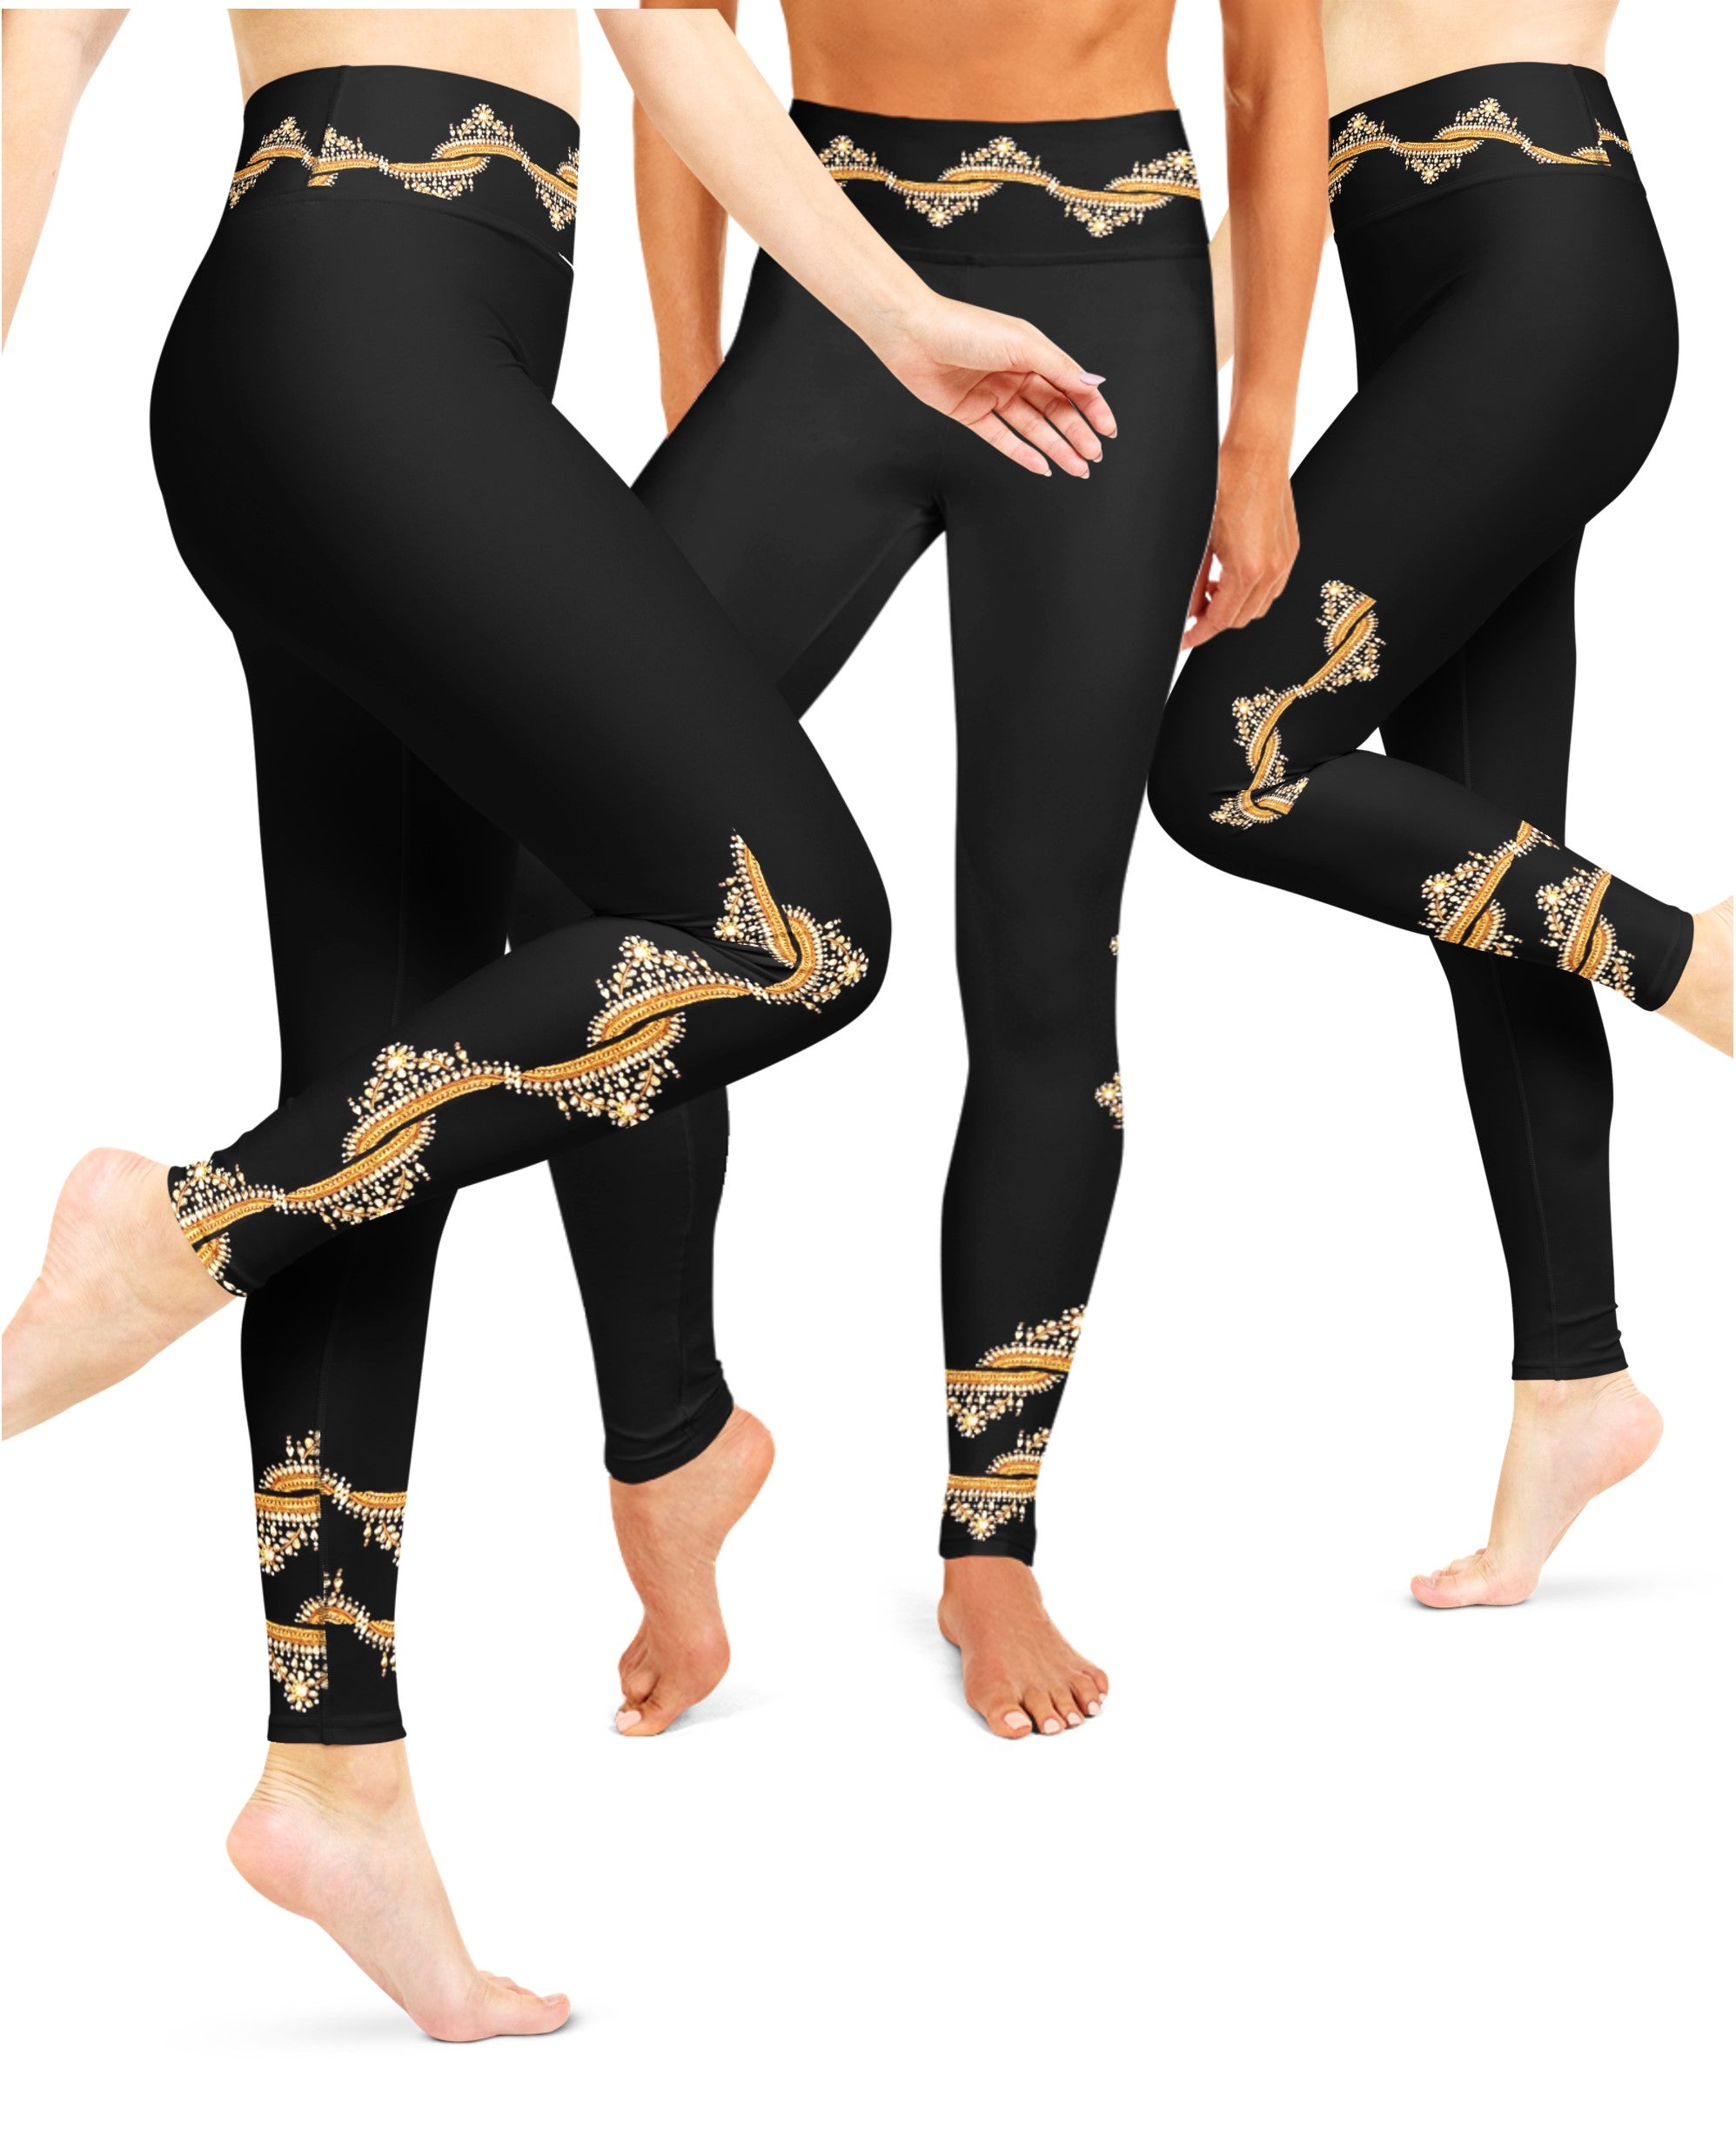 Women's Banana Republic BR STANDARD Capri Leggings Yoga Pants